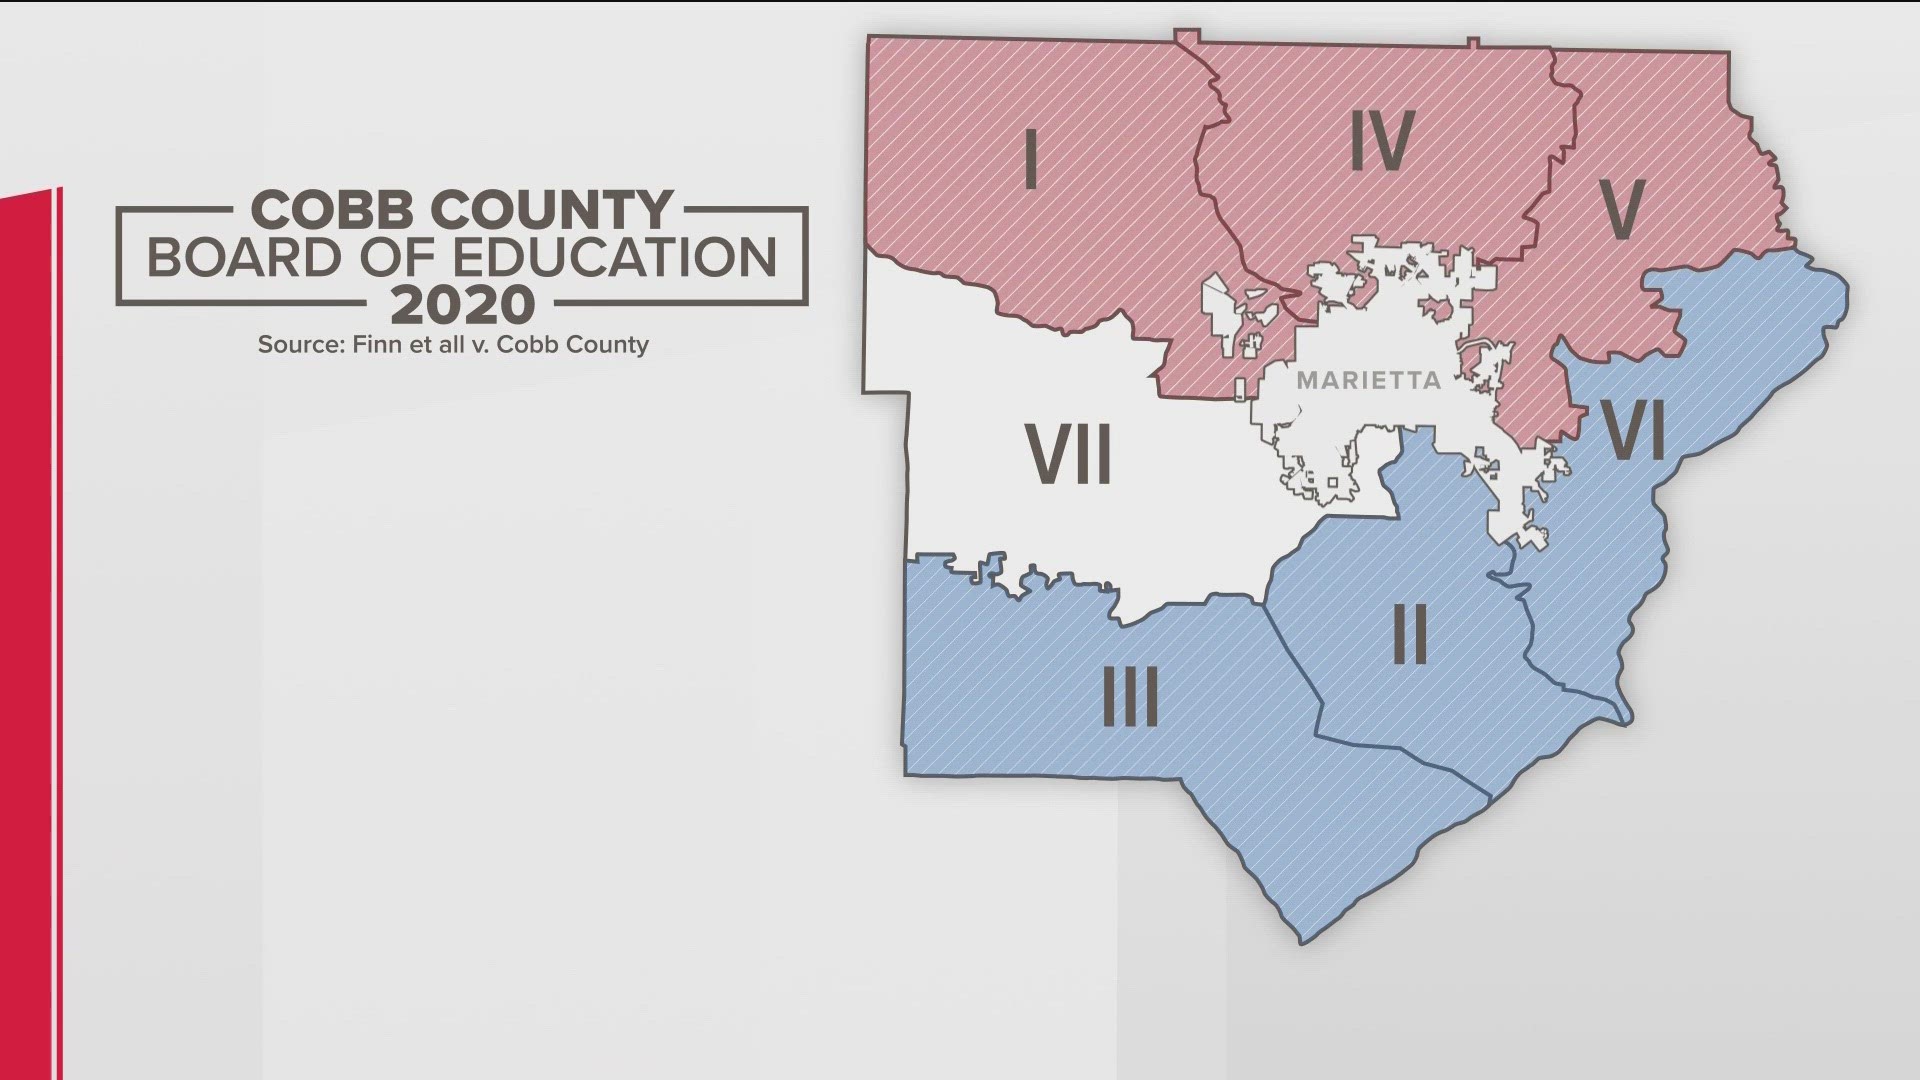 Though it's become a Democratic county, GOP still controls school board seats.